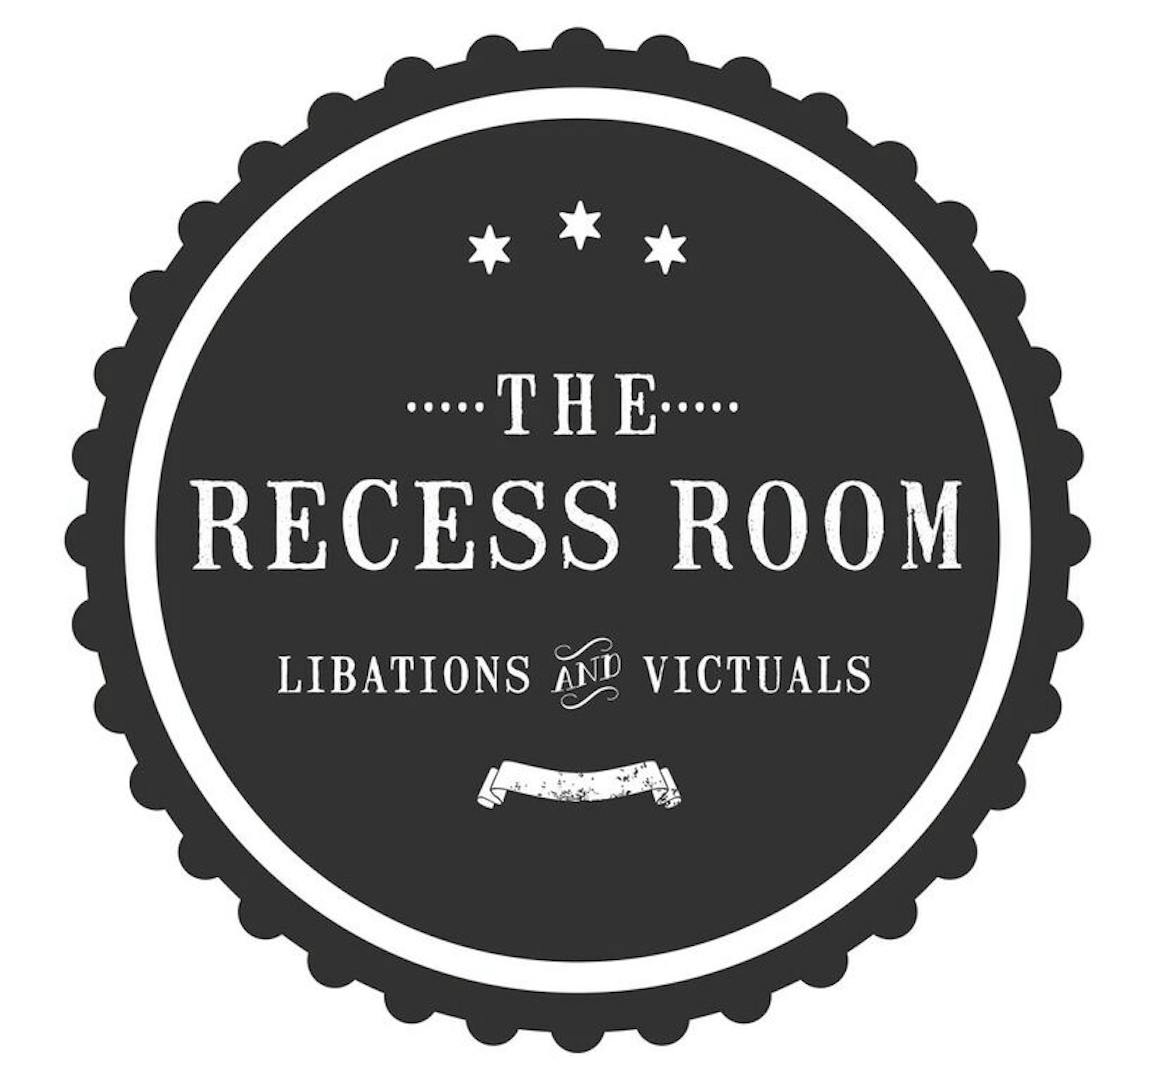 THE RECESS ROOM